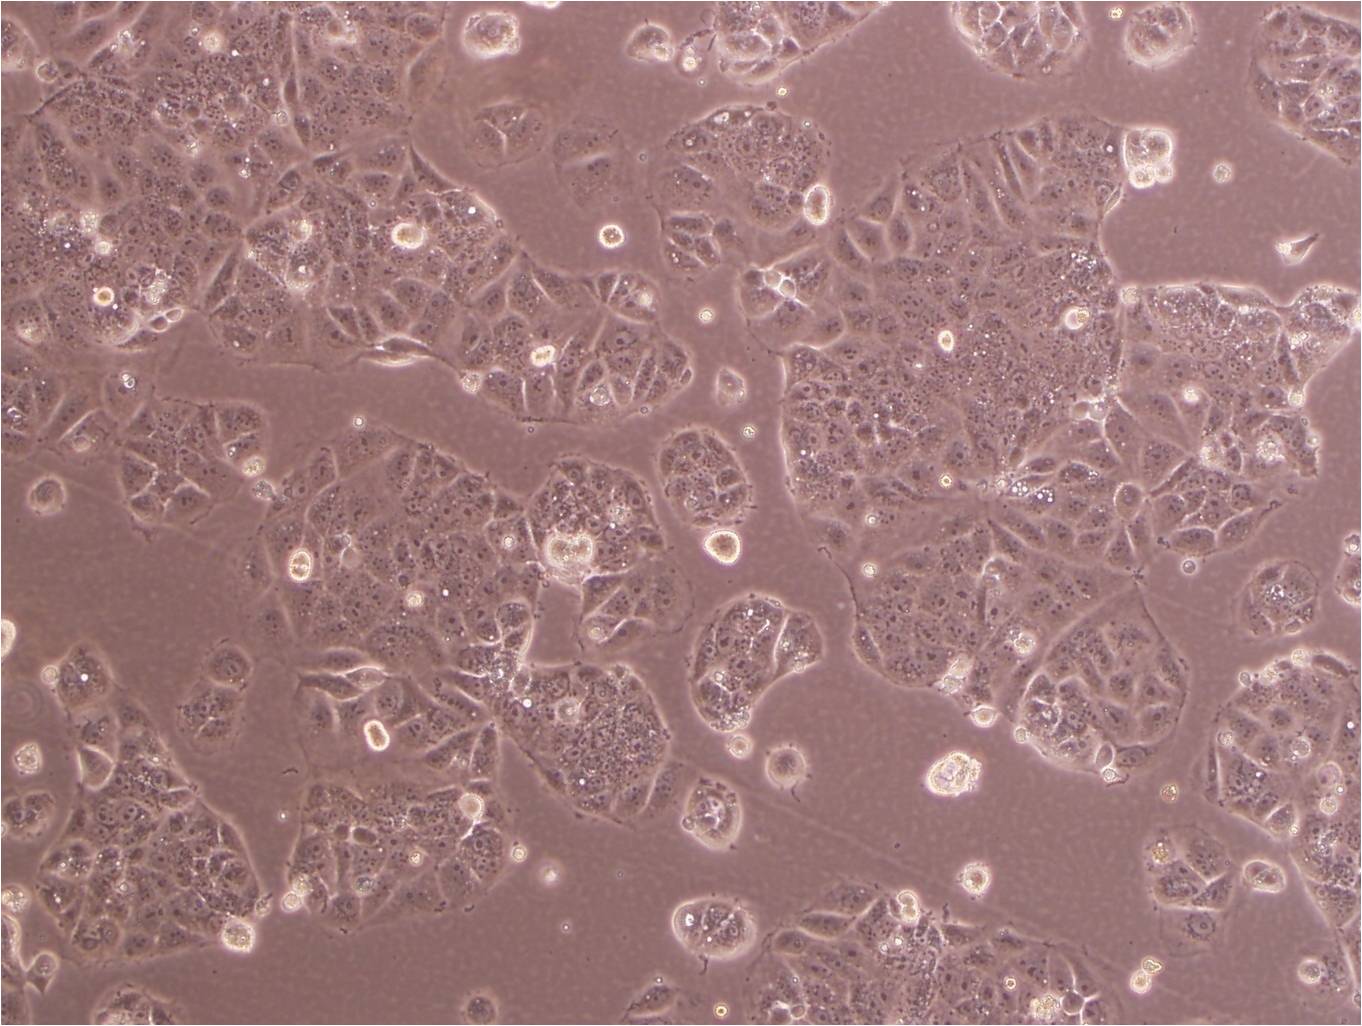 KMM-1 cell line人多发性骨髓瘤细胞系,KMM-1 cell line